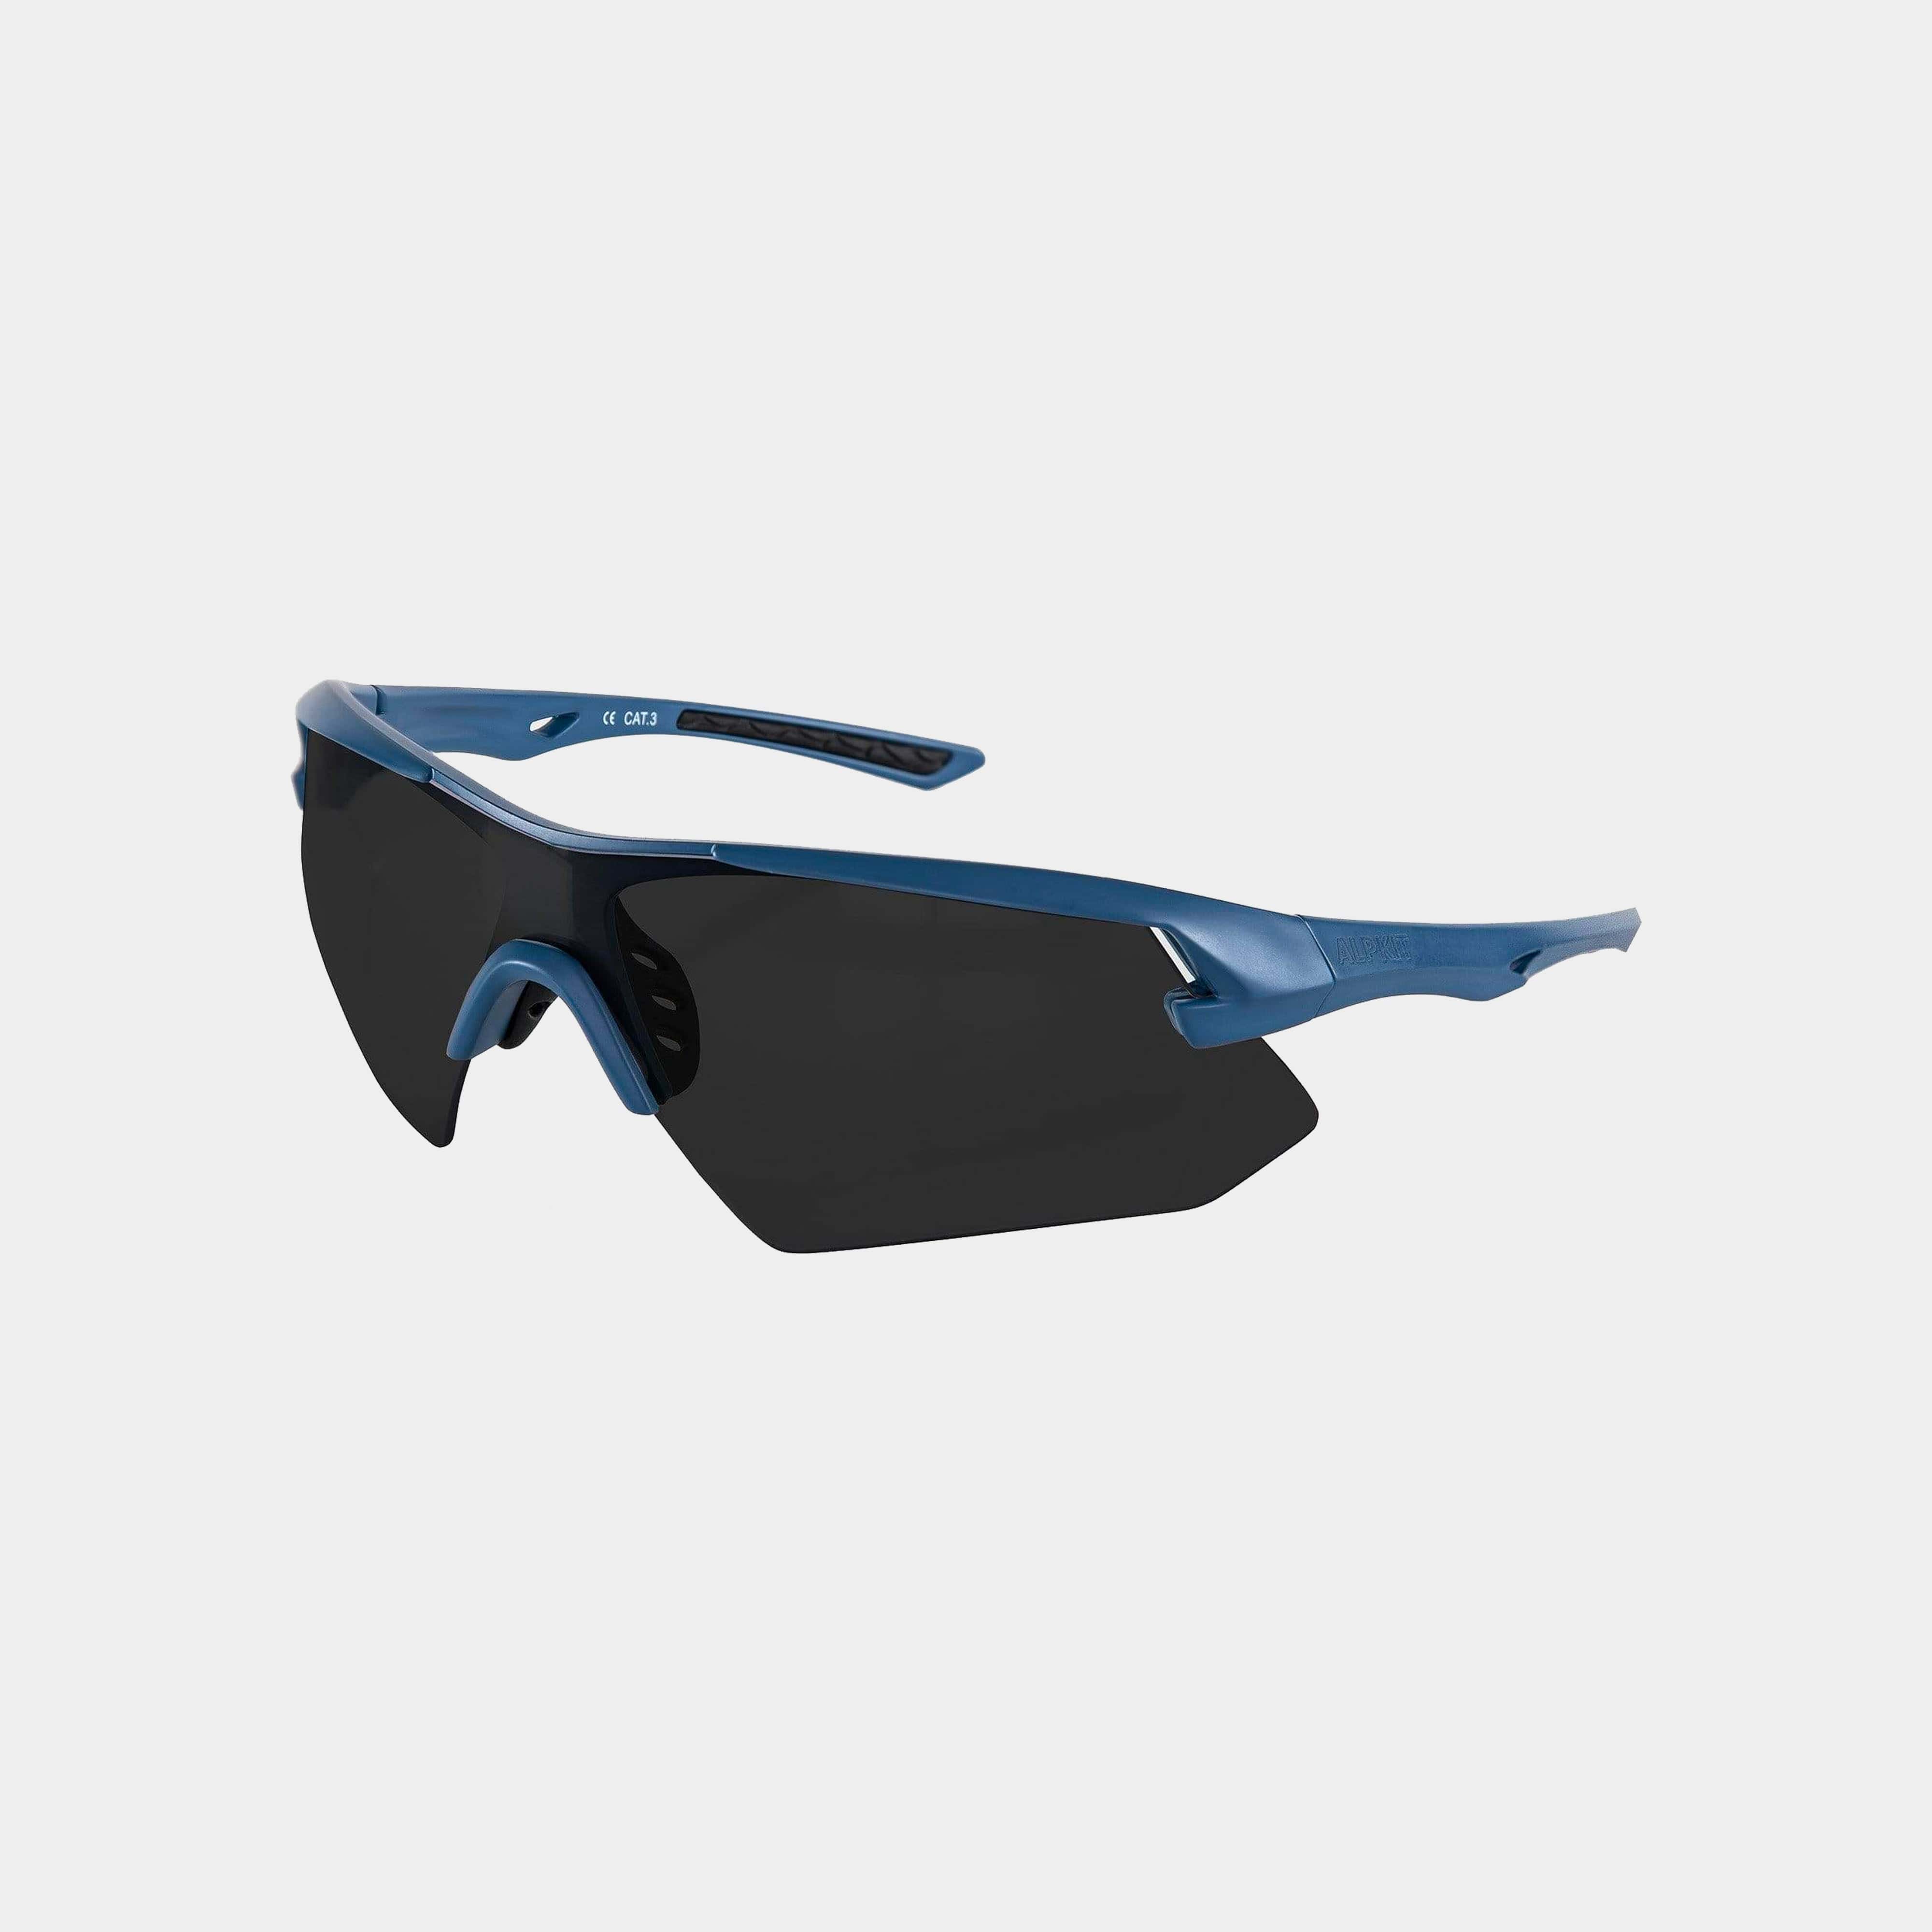 Buy Spectra Night Vision HD Glasses Online- Bikester Global Shop